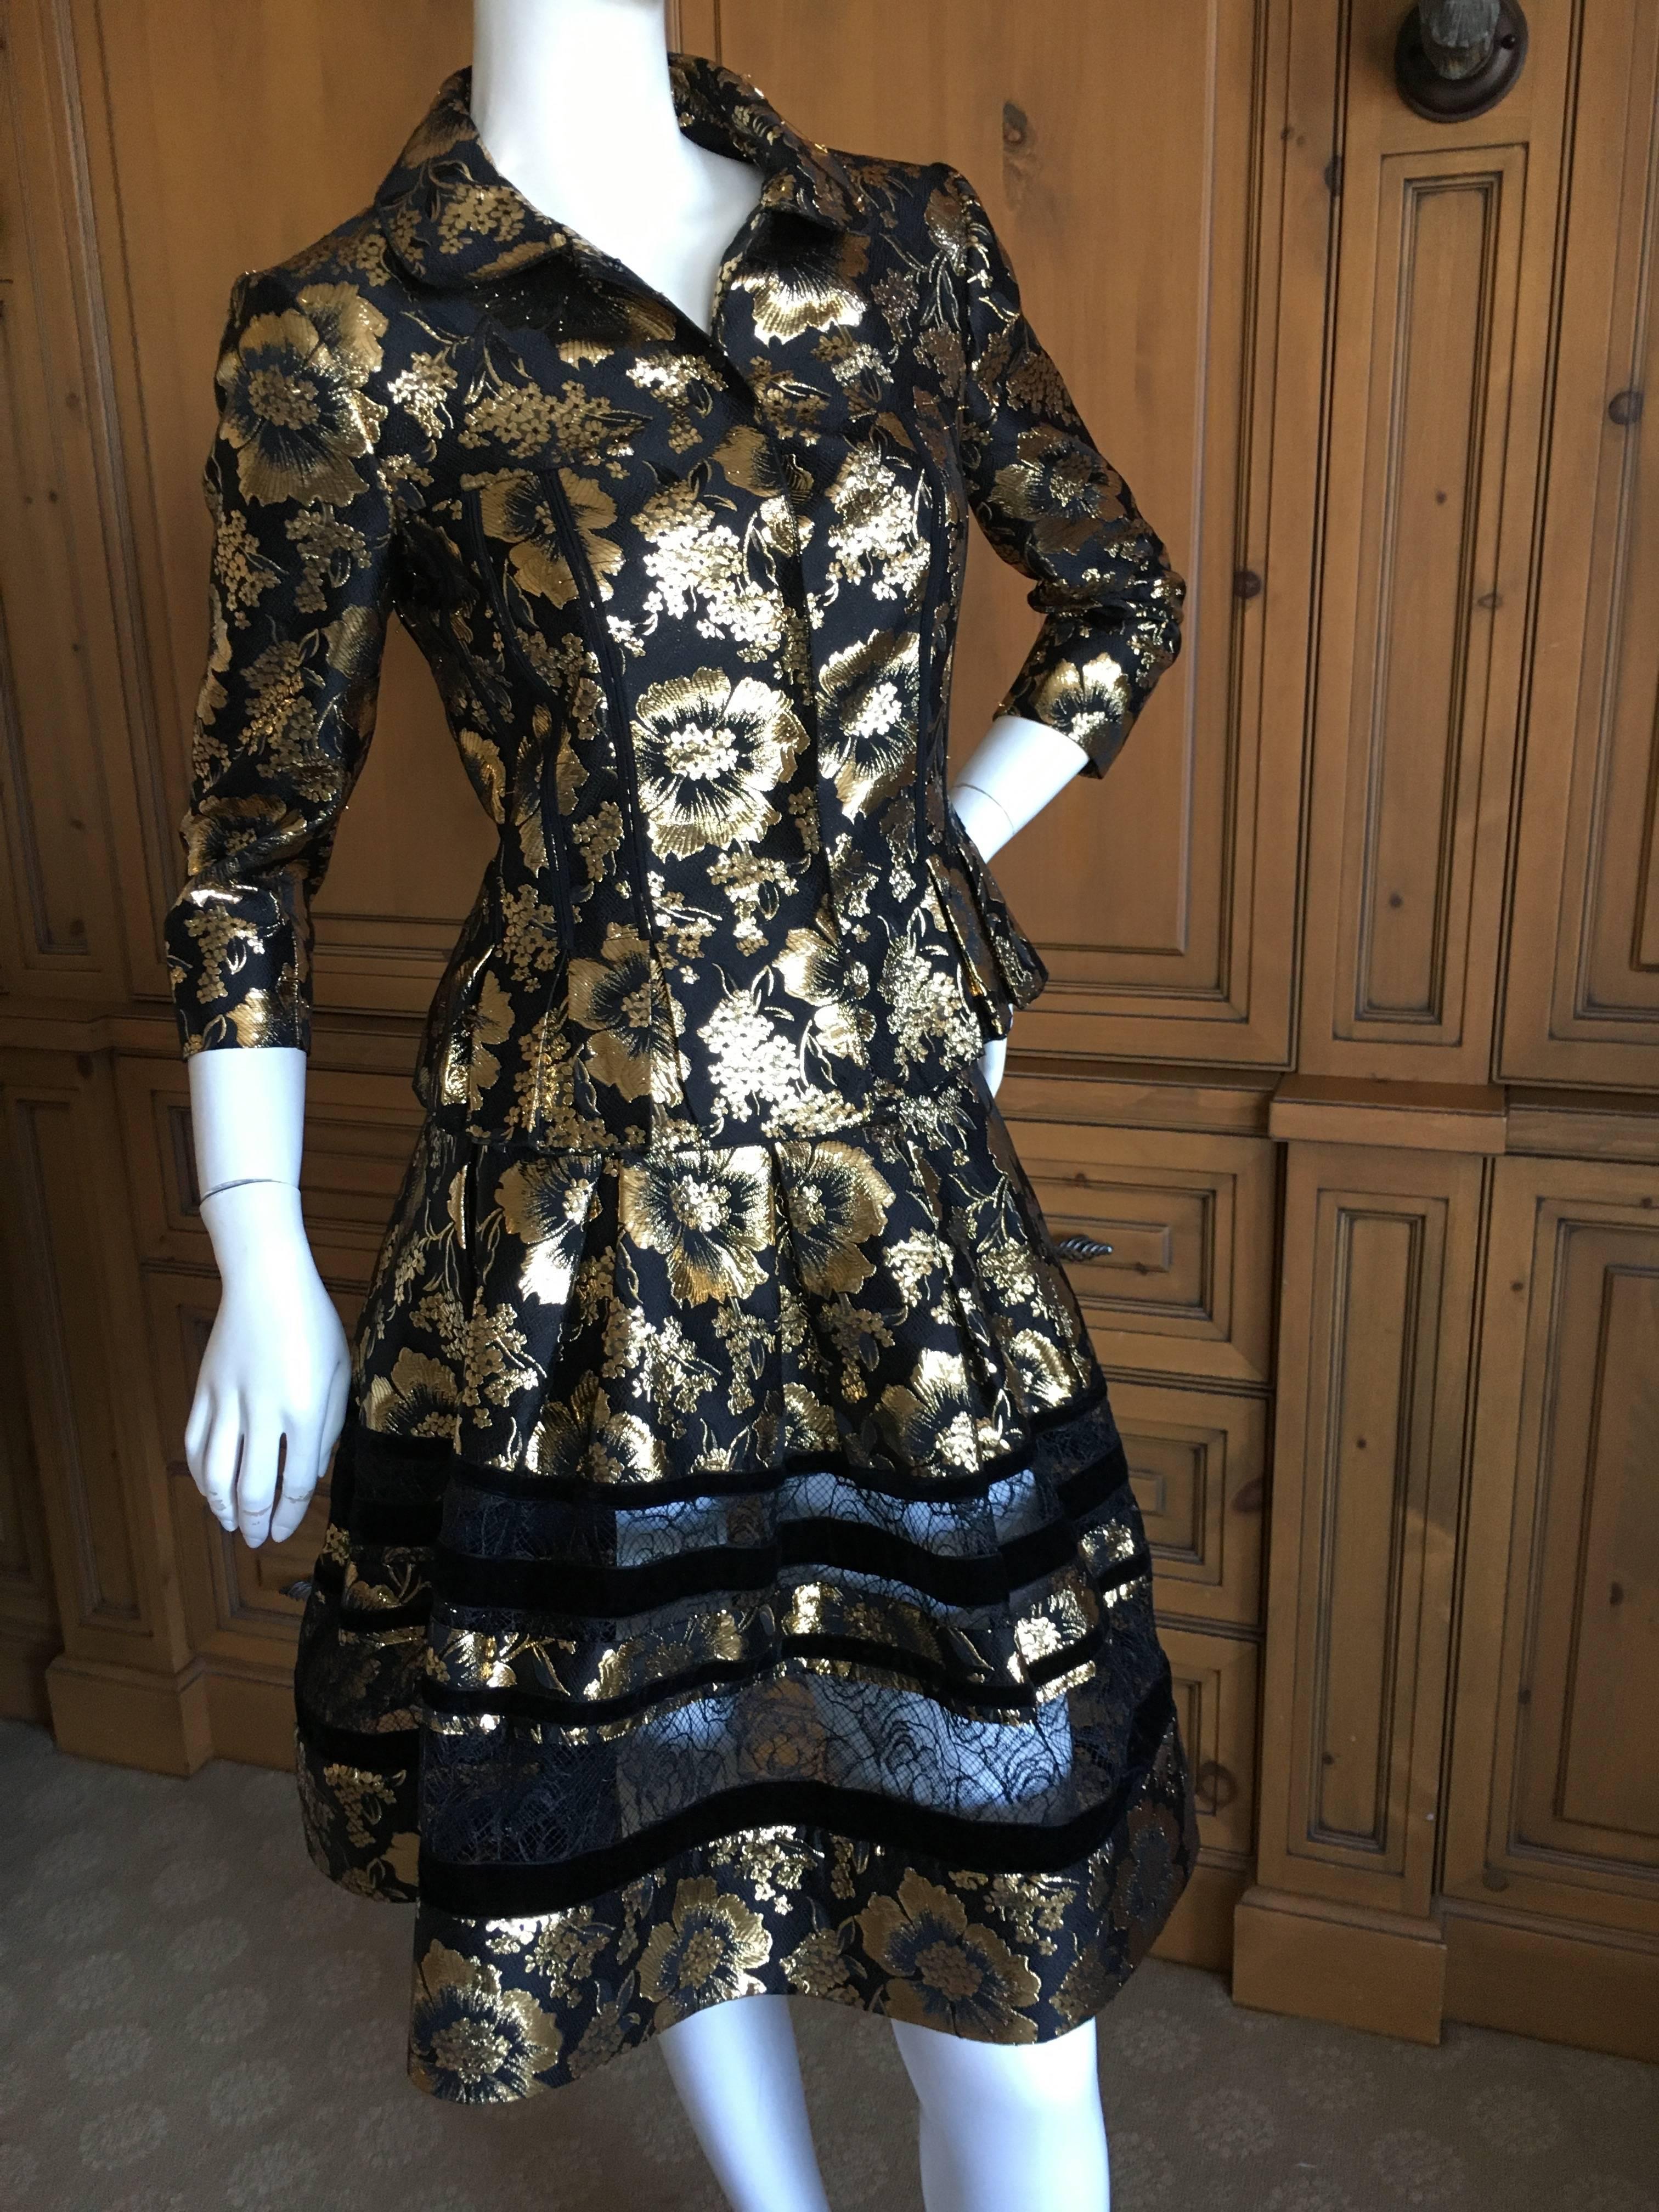 Oscar de la Renta Gold and Black Floral Jacquard Skirt Suit In Excellent Condition For Sale In Cloverdale, CA